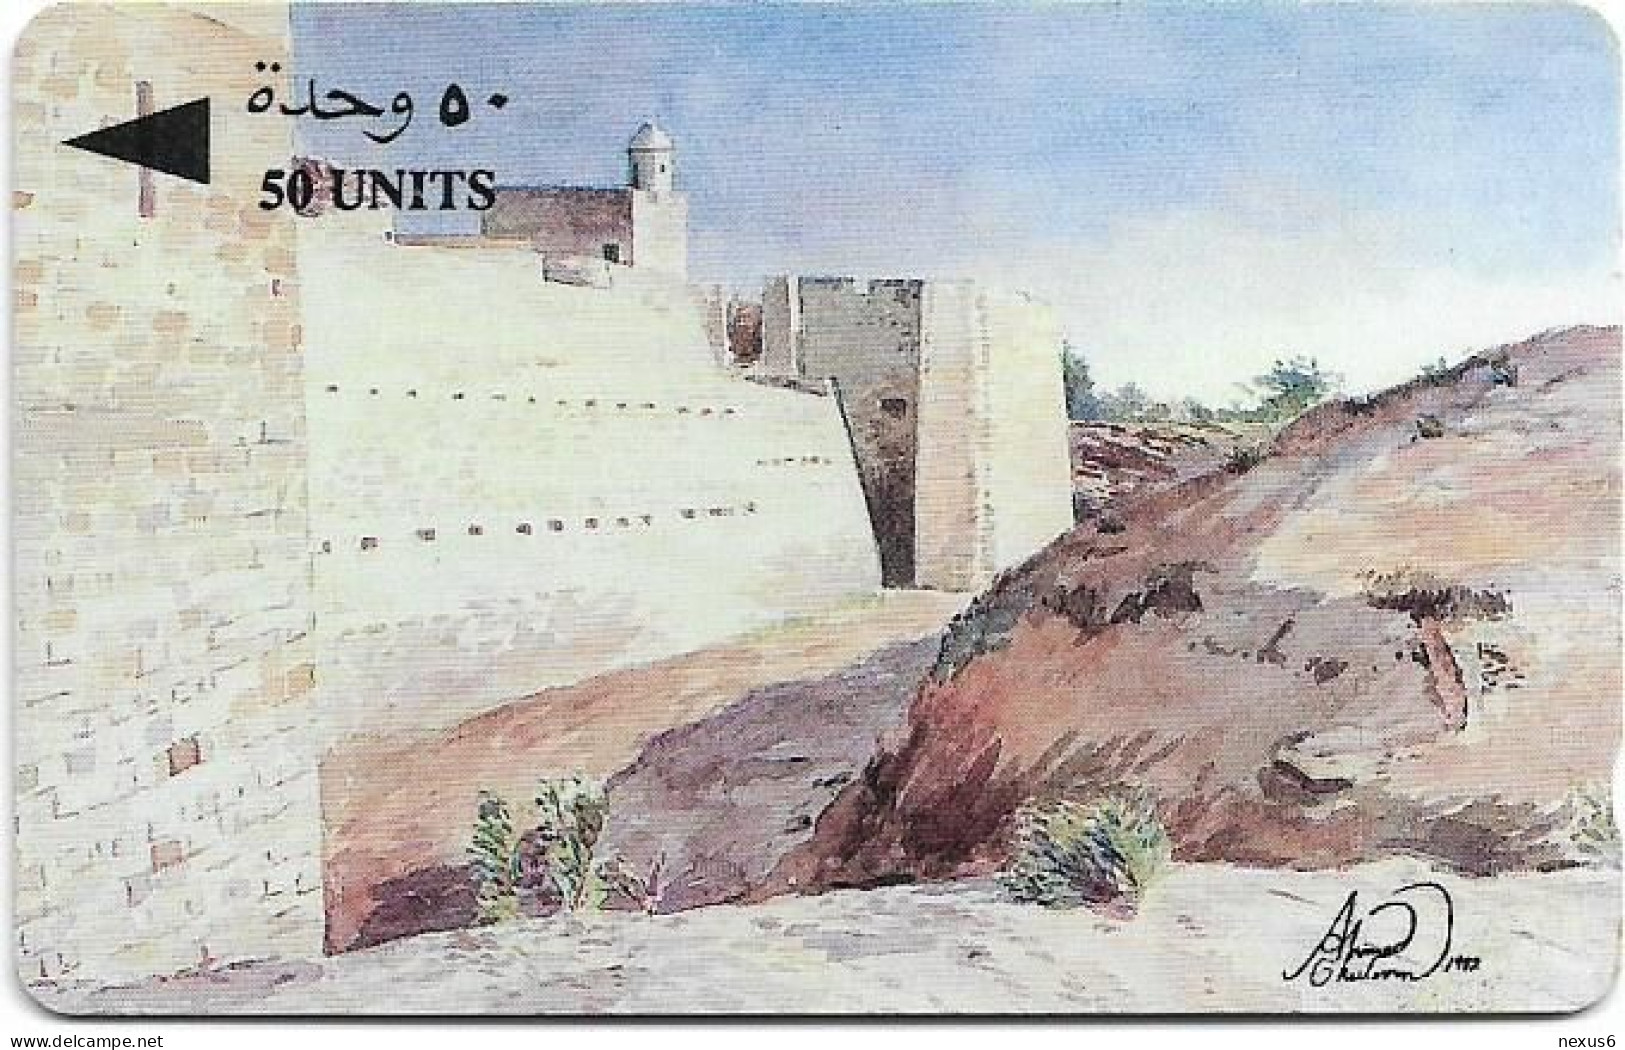 Bahrain - Batelco (GPT) - Qalat Al Bahrain Fort - 18BAHA - 1993, 40.000ex, Used - Bahrein